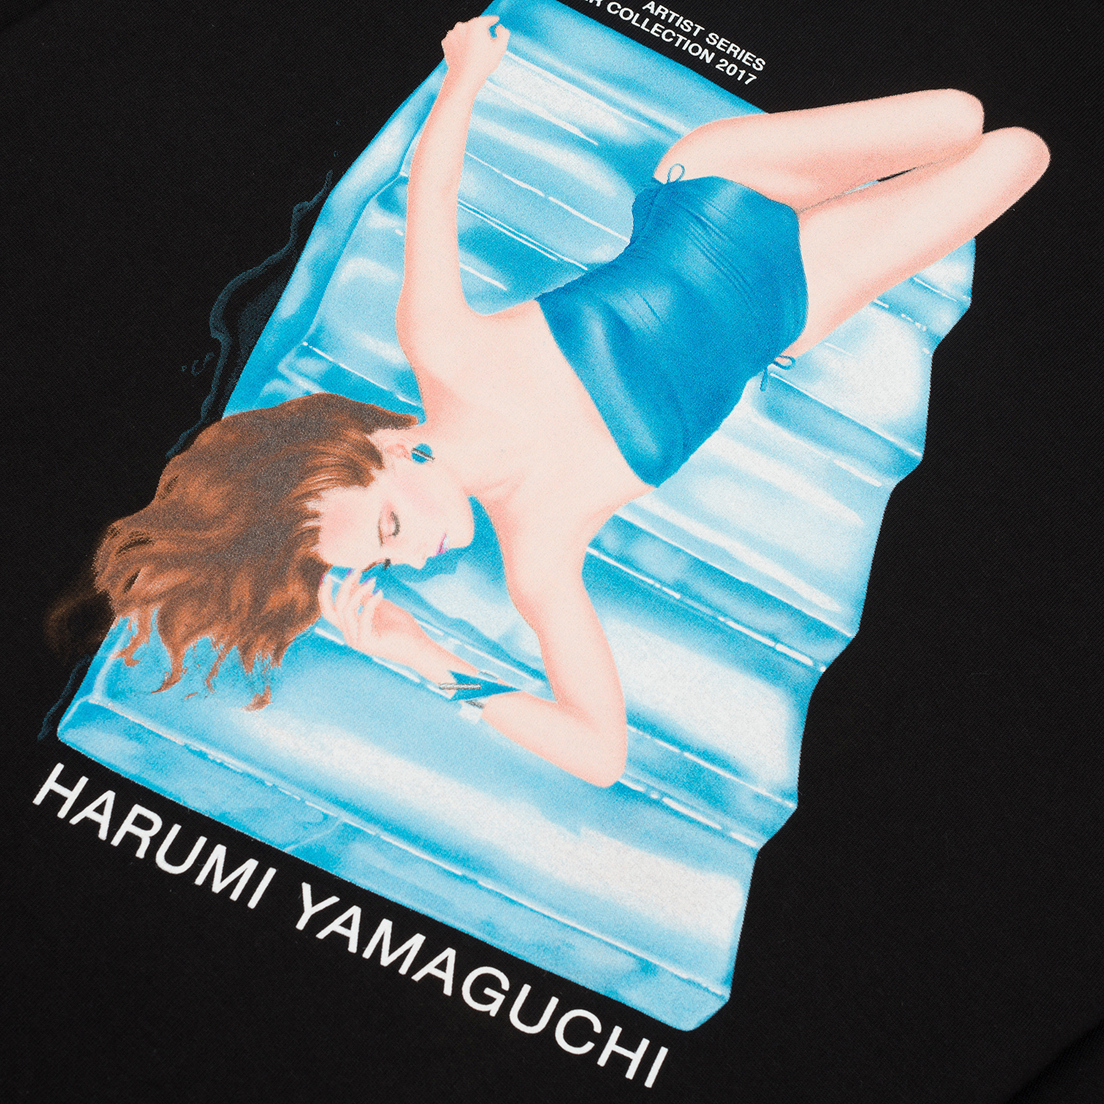 Stussy Мужской лонгслив Harumi Yamaguchi Raft